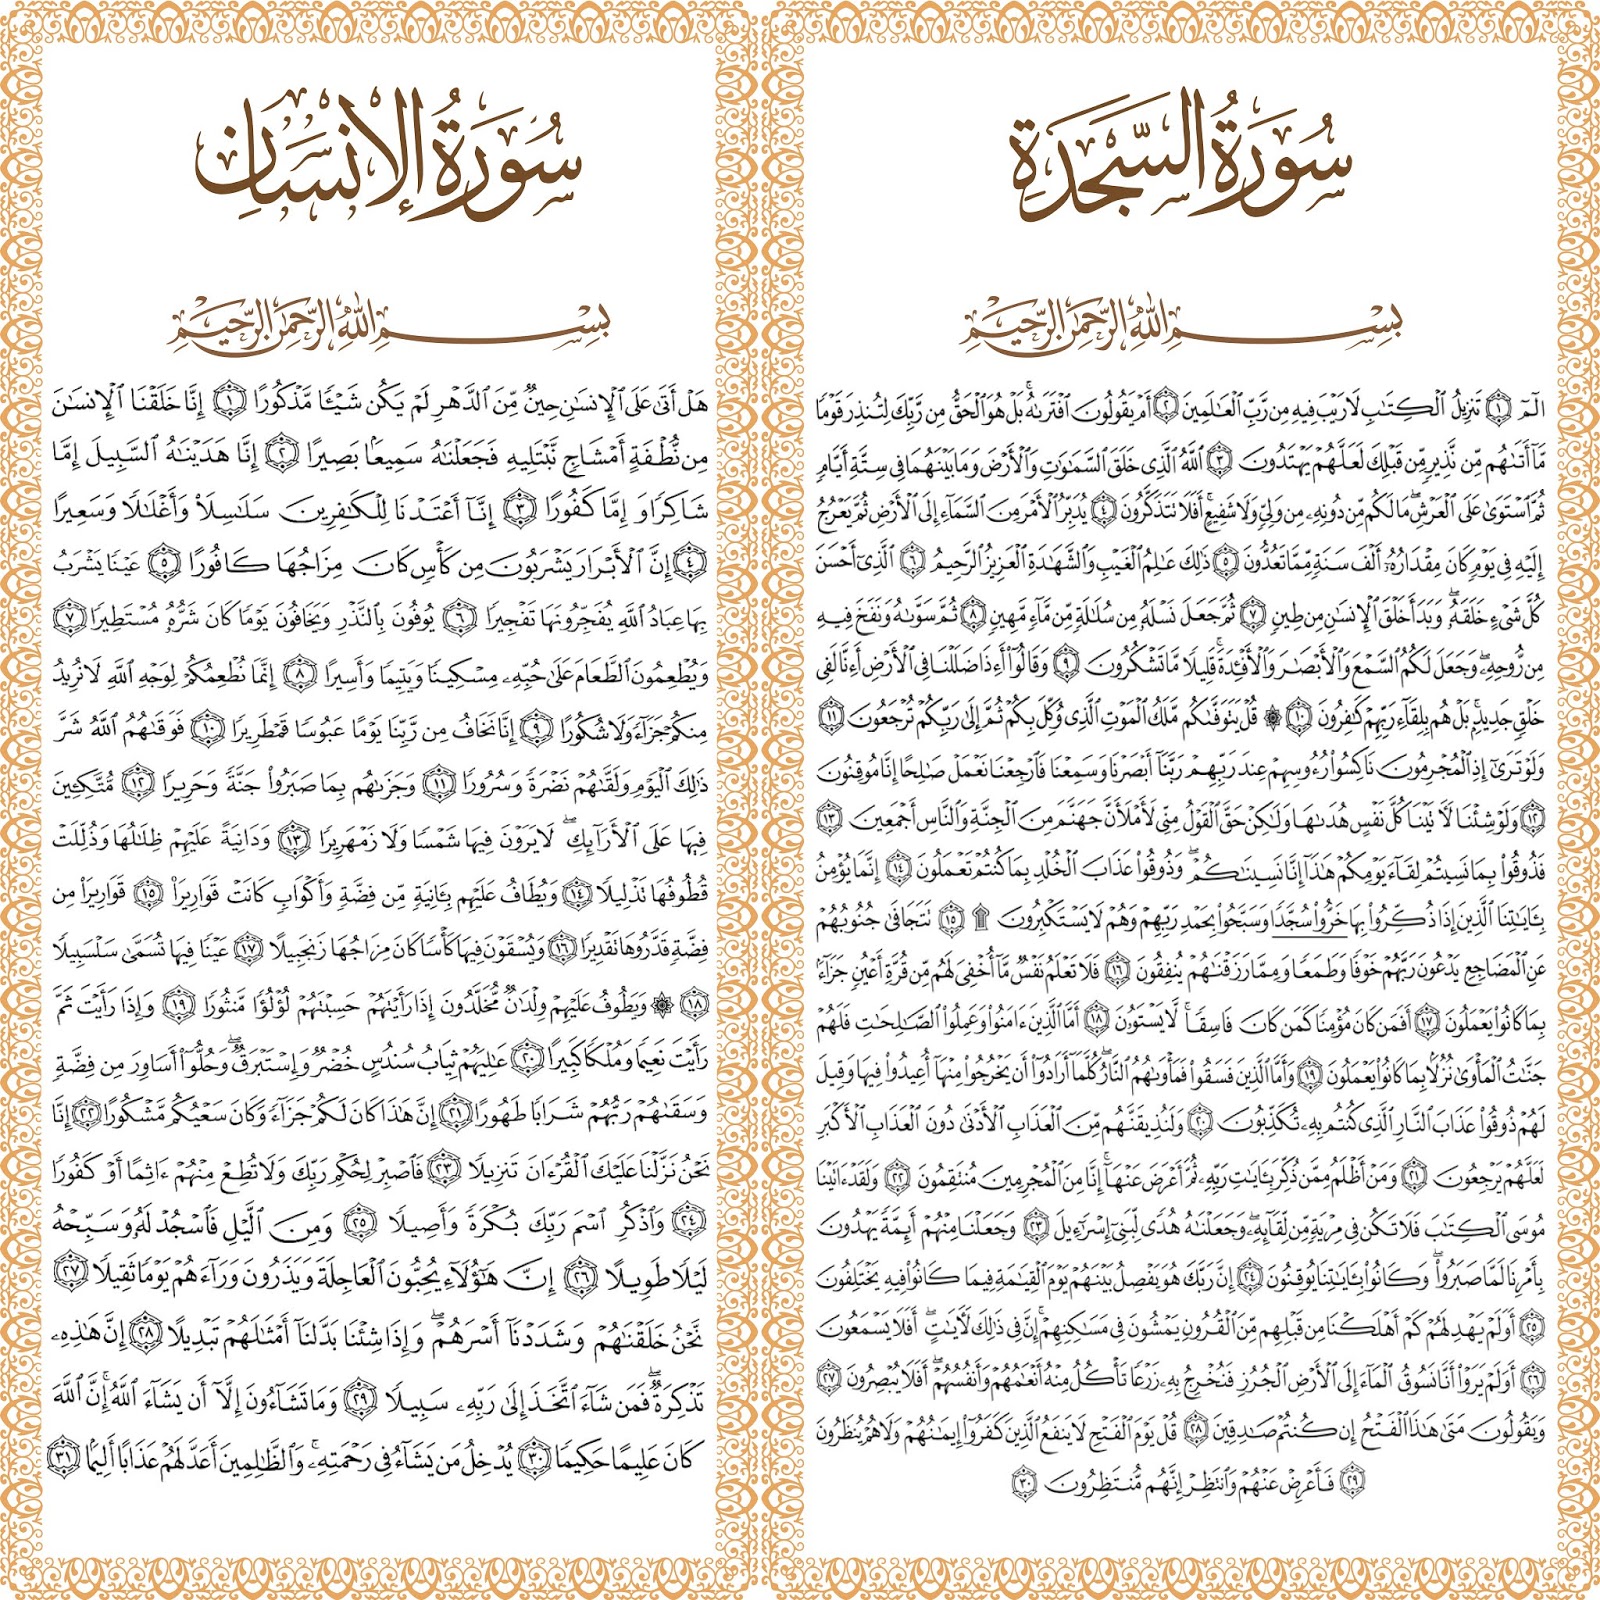 SuGaR and SaLt: Surah Al-Sajdah & Sural Al-Insan